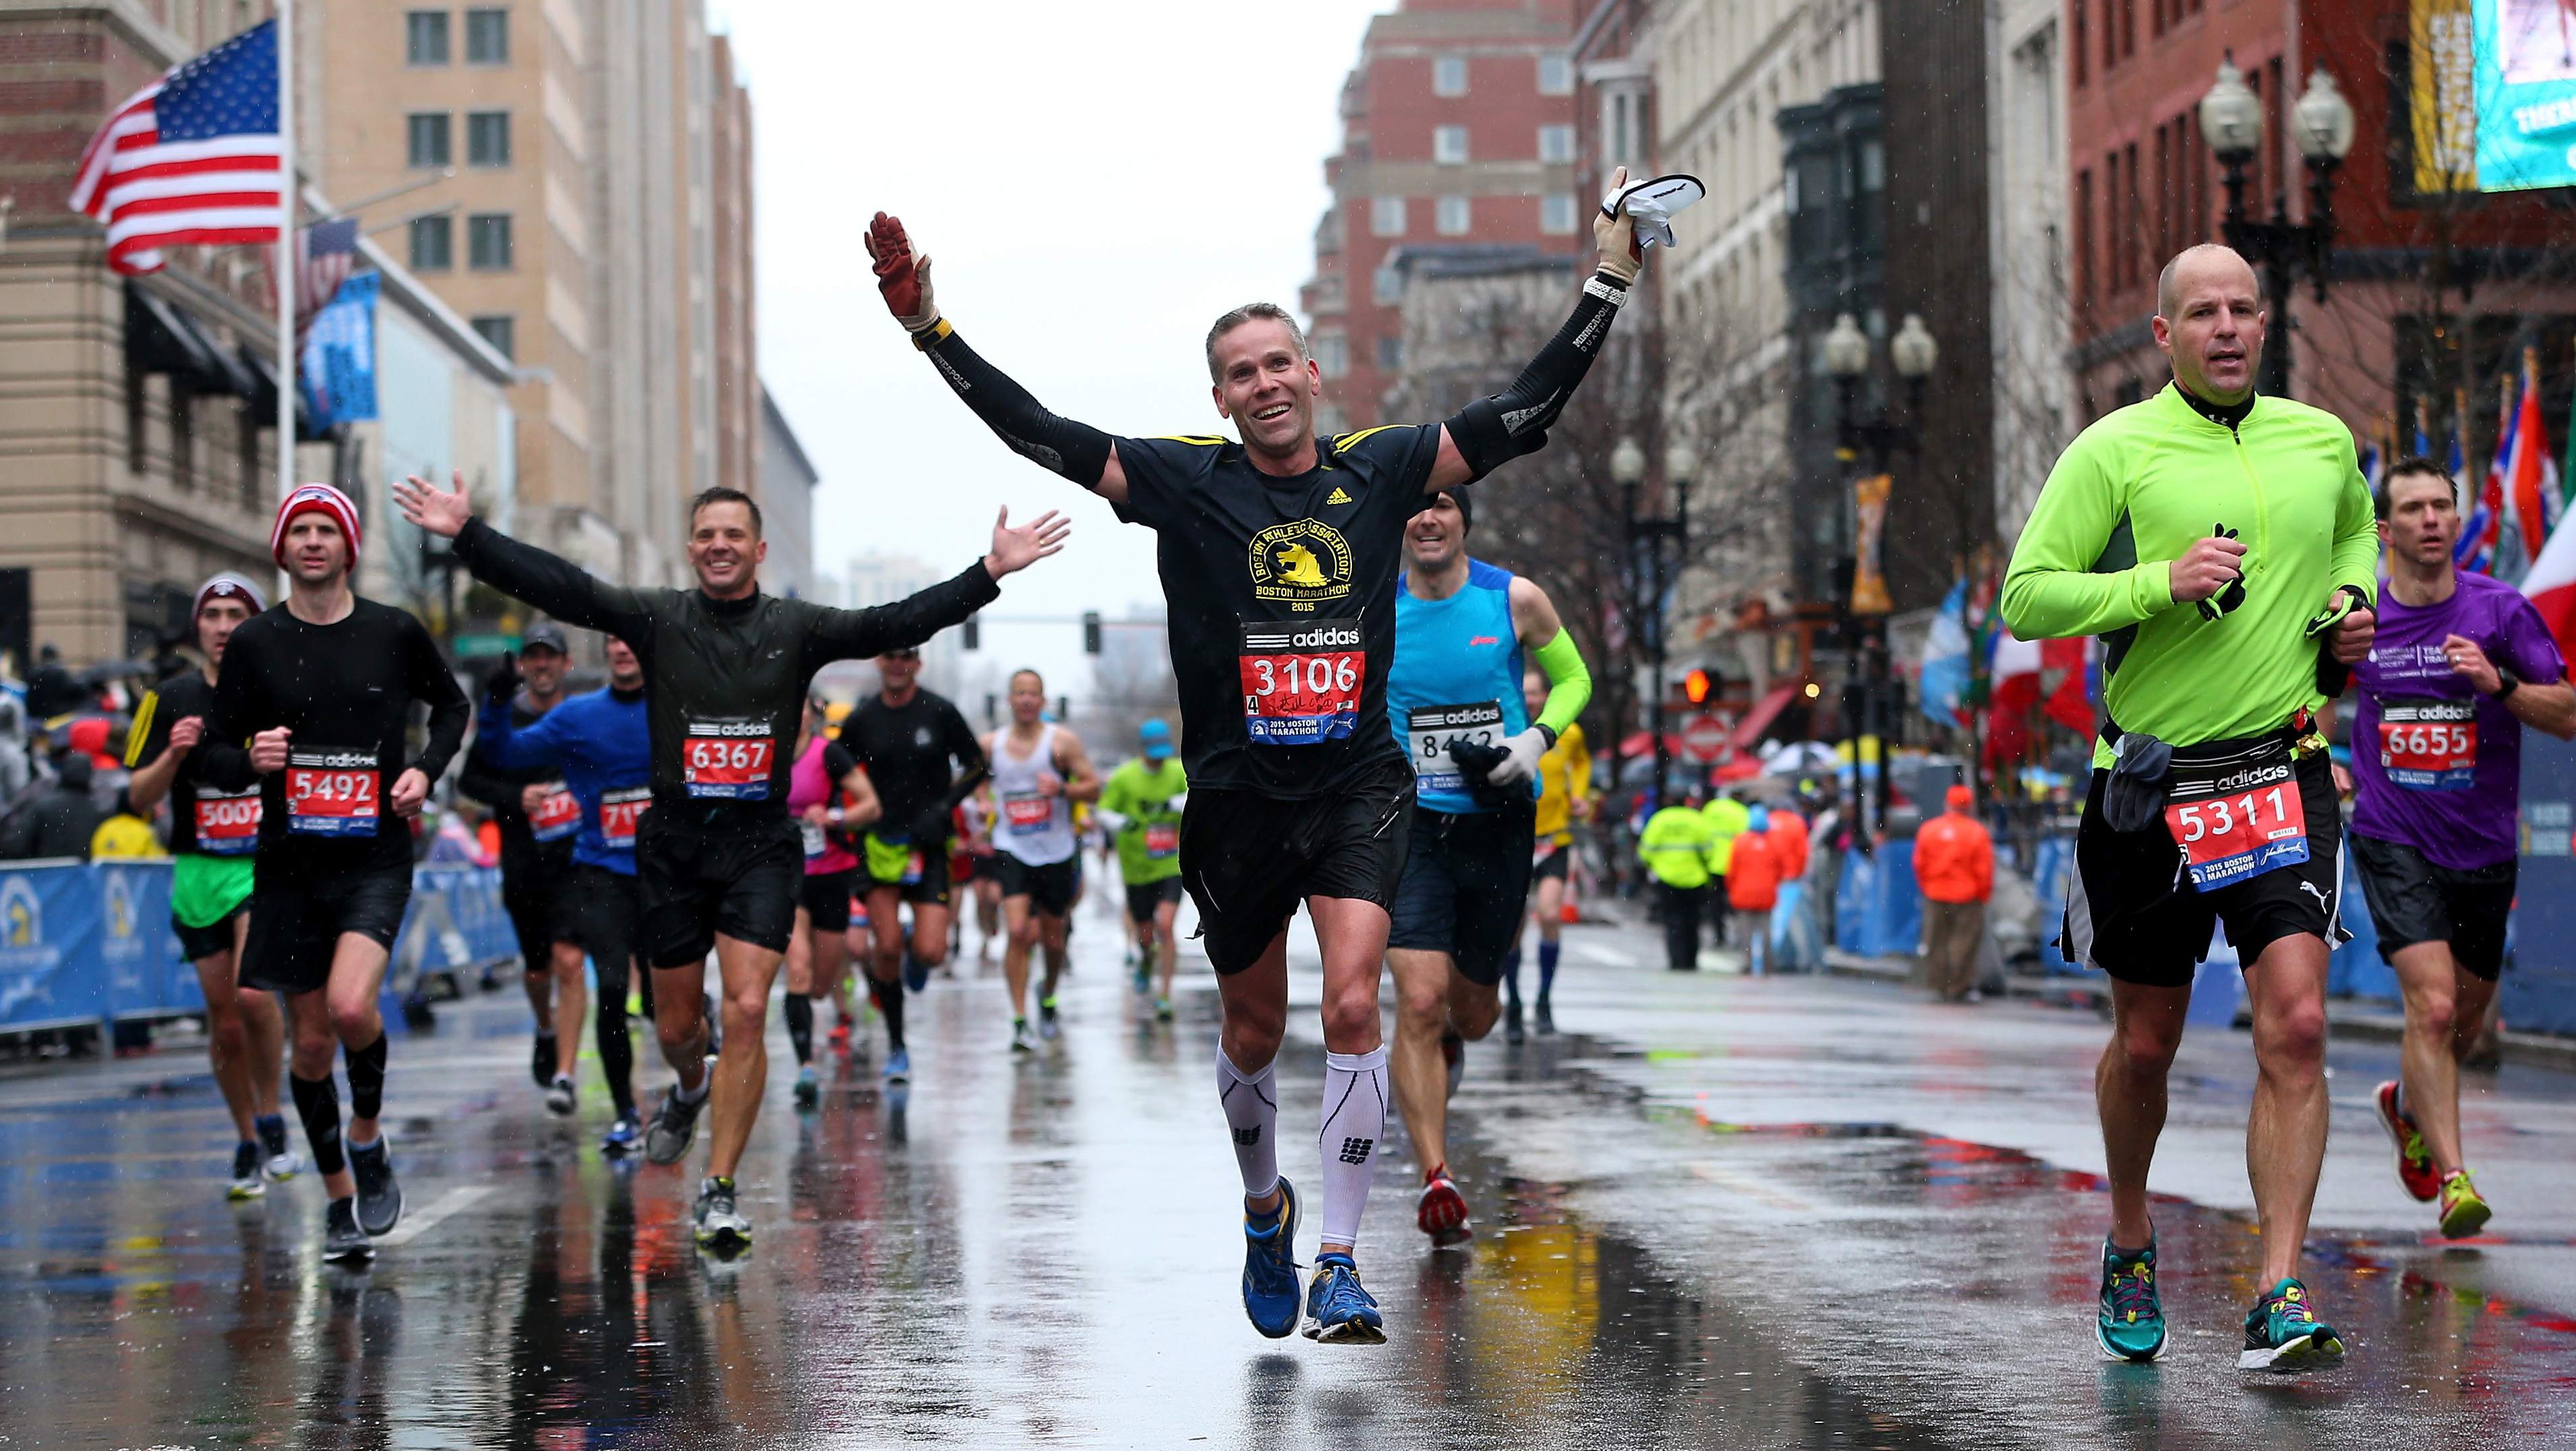 Boston Marathon 2016 Date & Start Time When Is It?